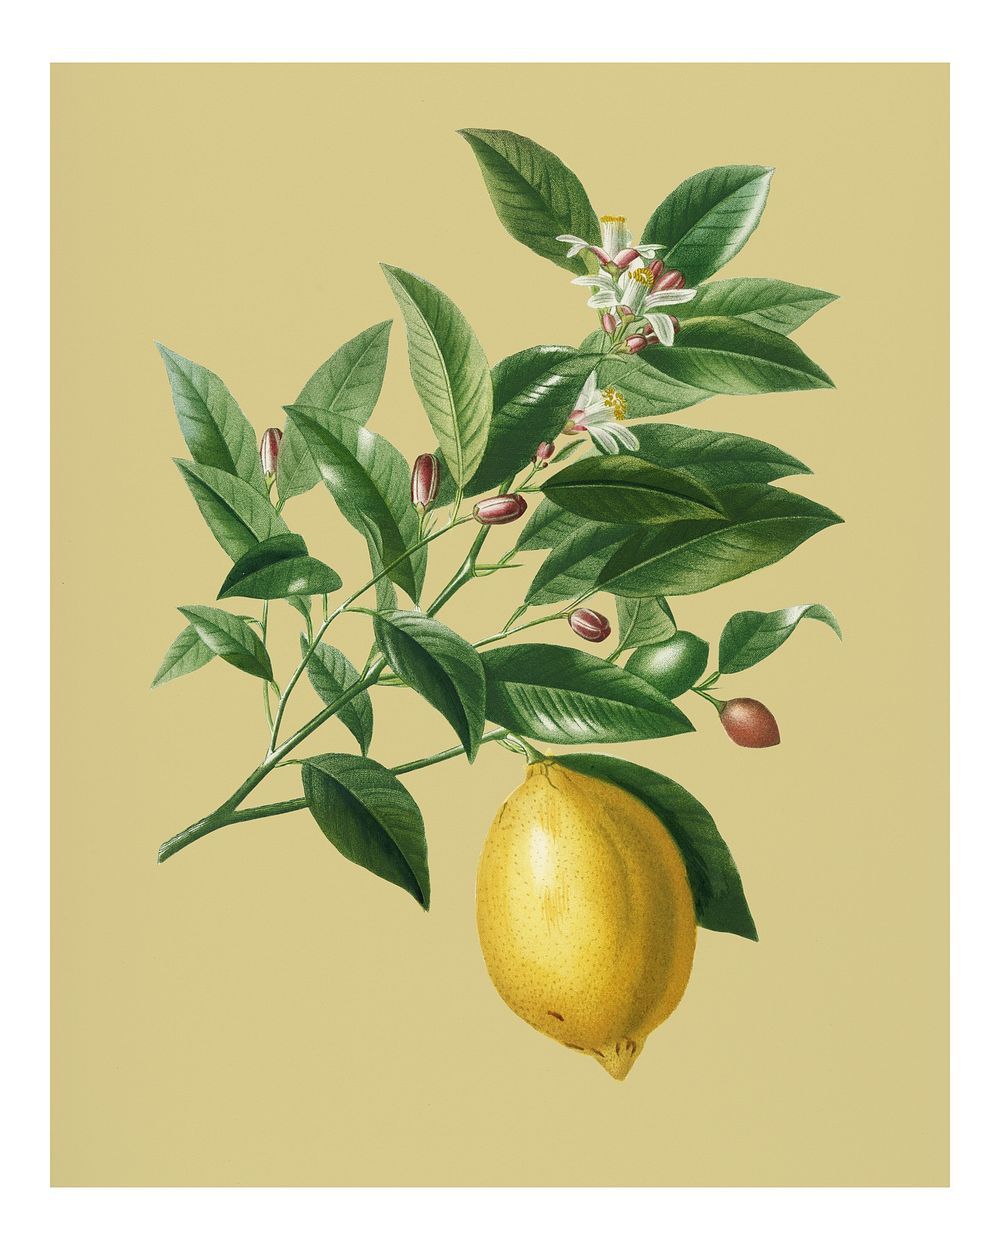 Vintage Lemon (Citrus Limonium) illustration wall art print and poster.